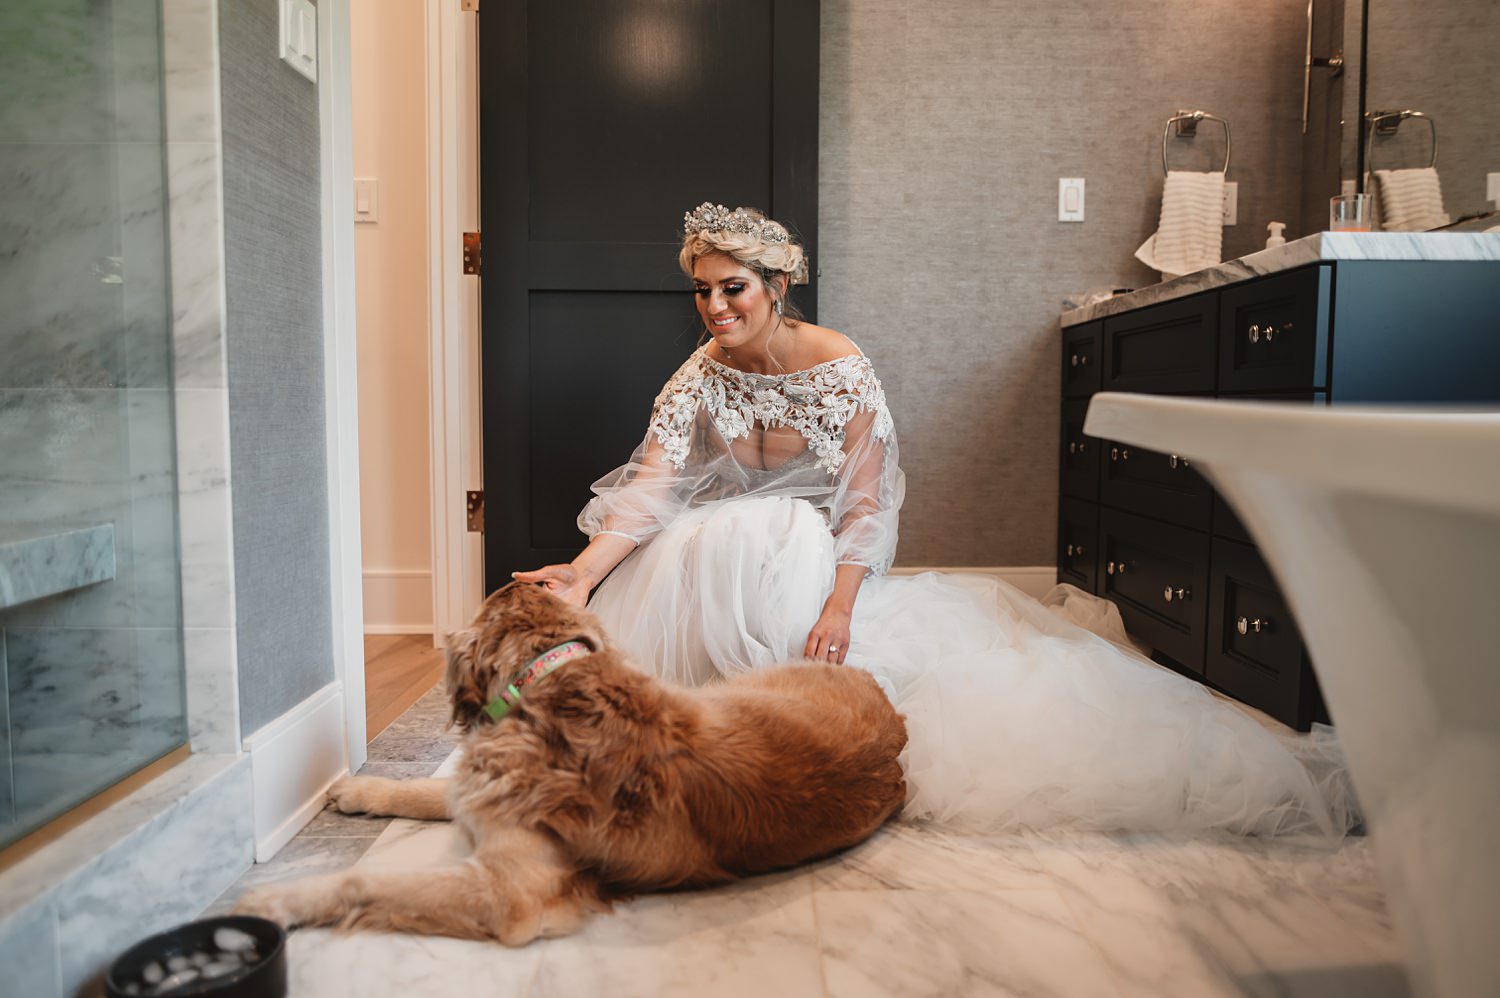 Lake Geneva Micro Wedding - The Adamkovi bride with her sick dog